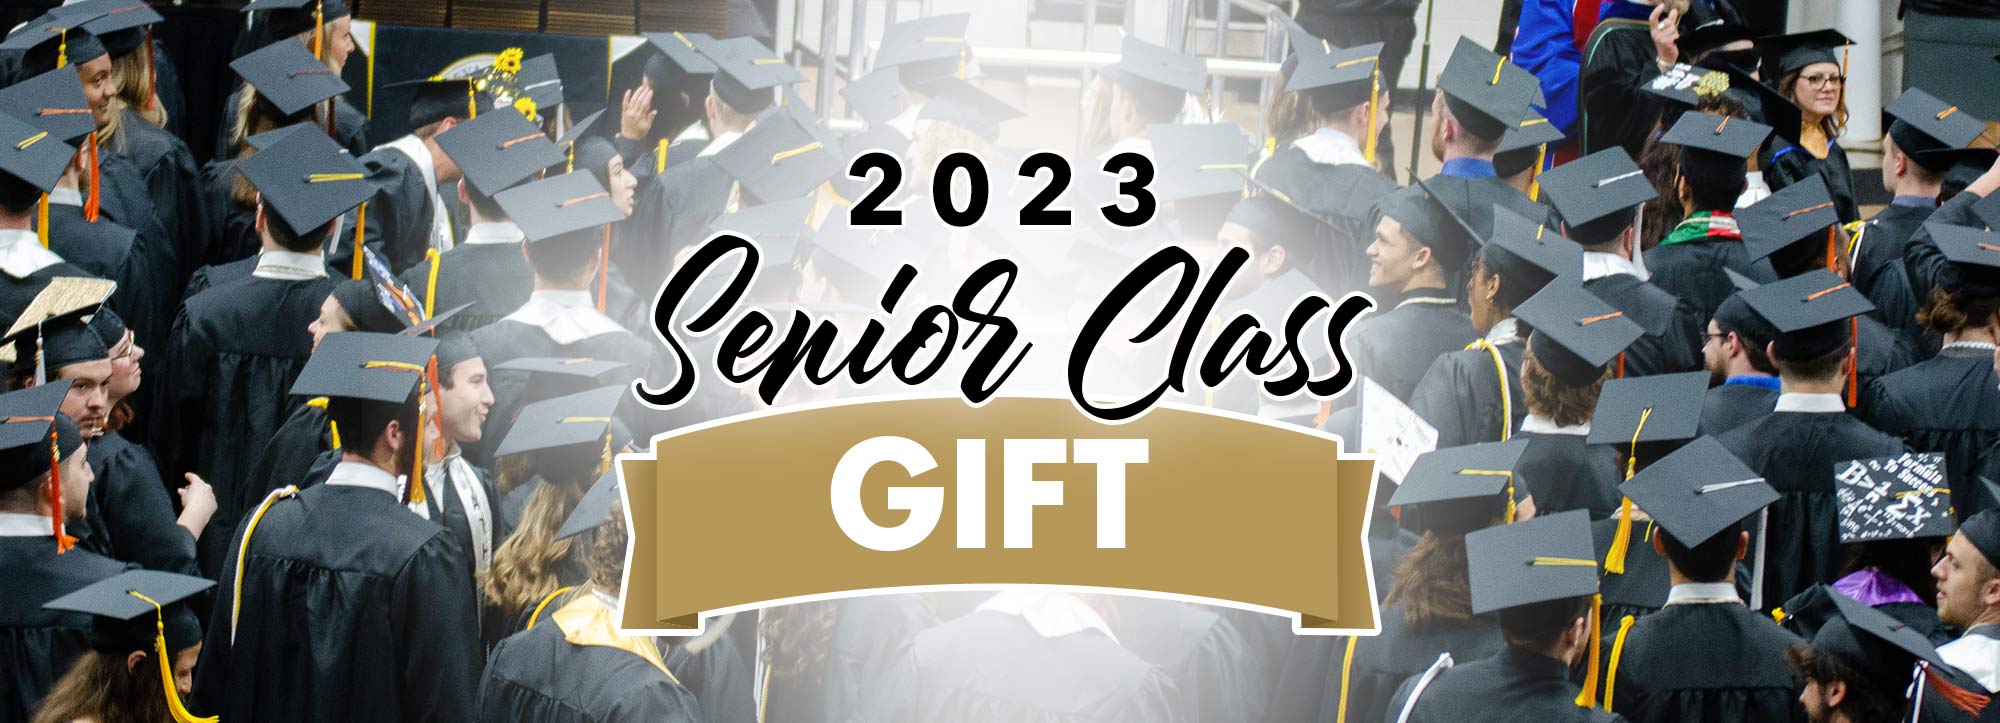 Senior Class Gift 2023